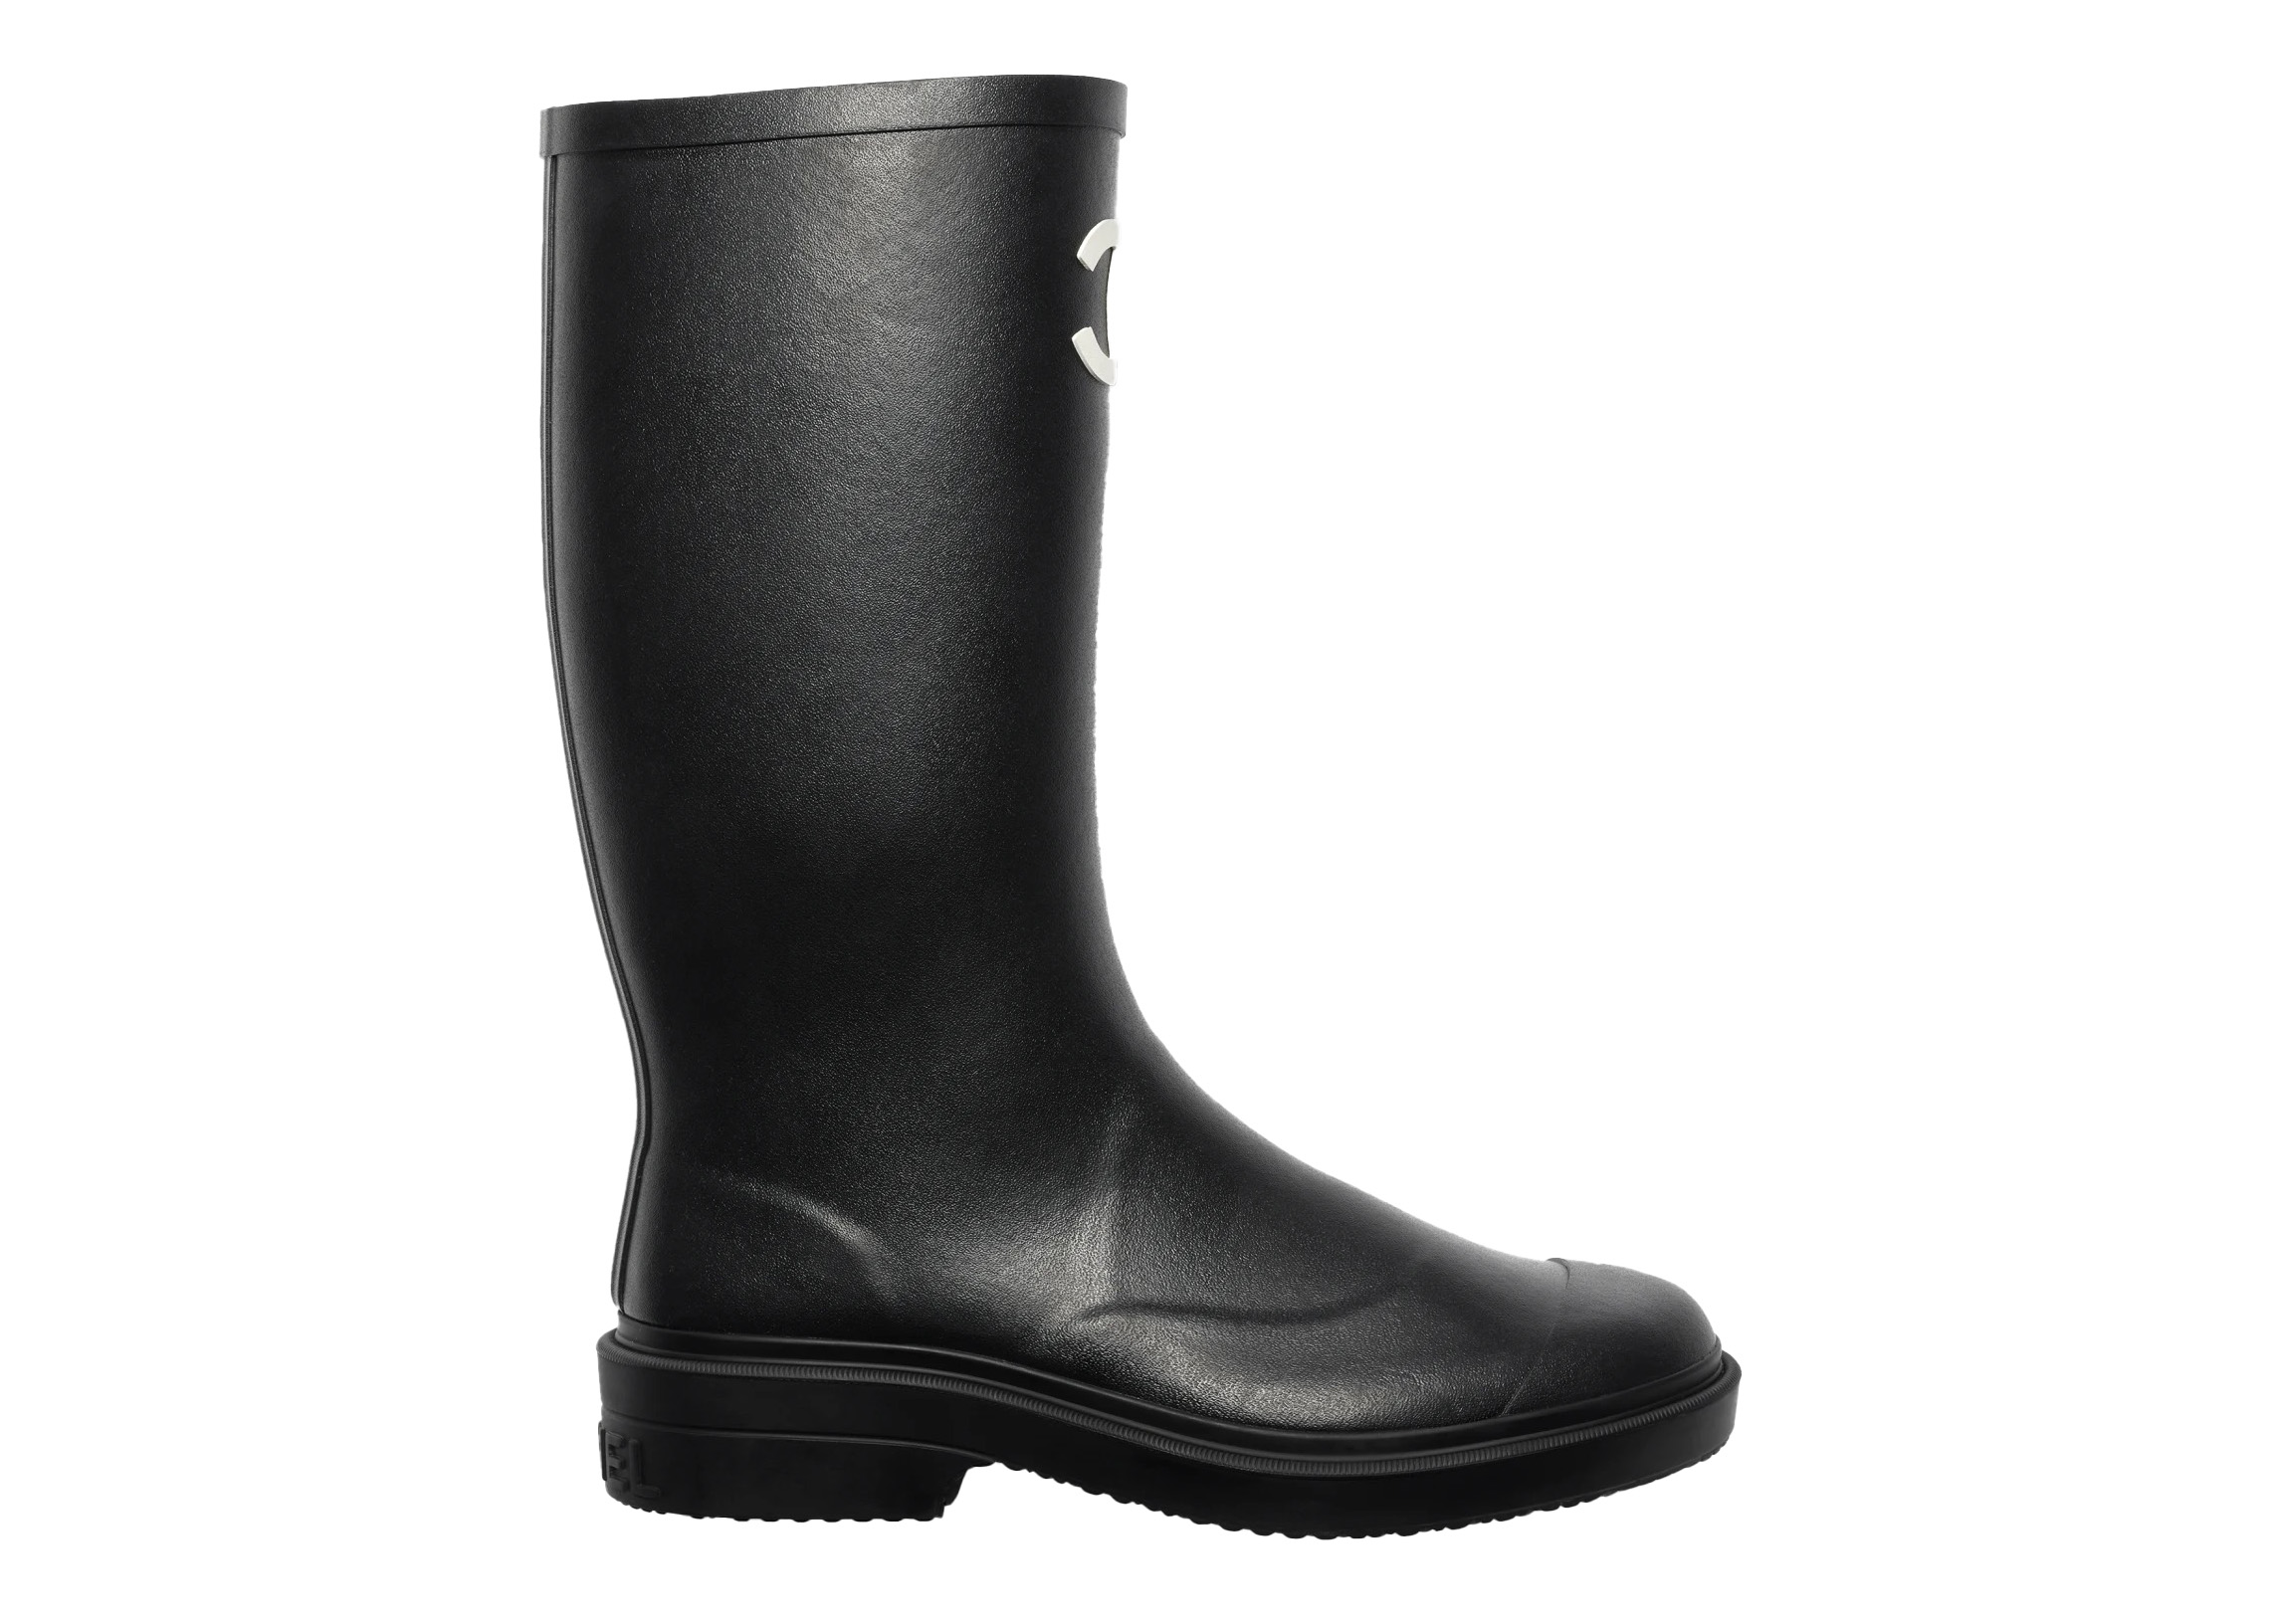 Chanel Rubber Rain Boots Black - G39620 X56326 94305 - US